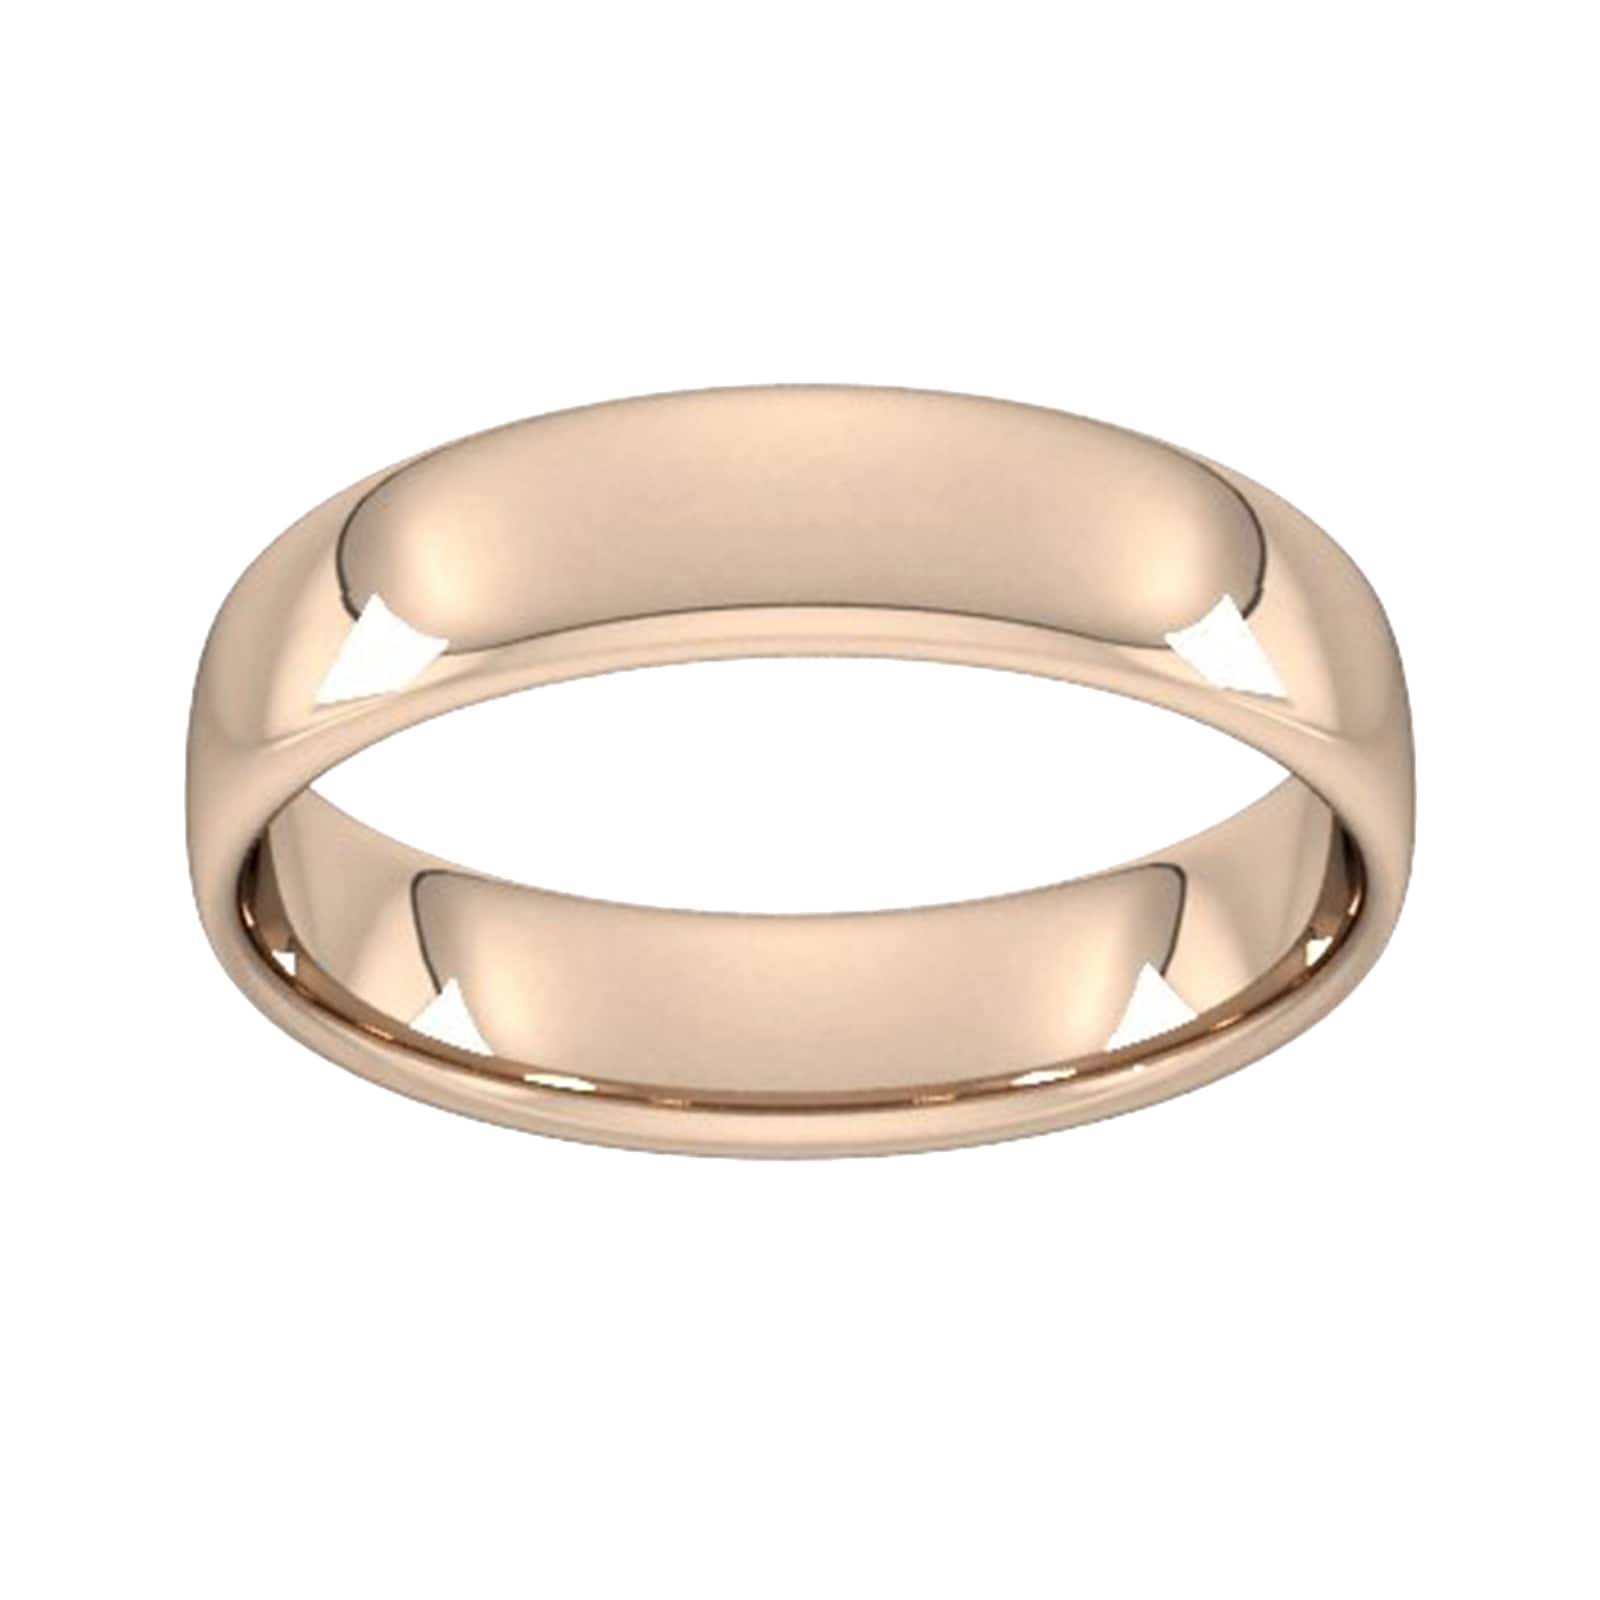 5mm Slight Court Standard Wedding Ring In 9 Carat Rose Gold - Ring Size G